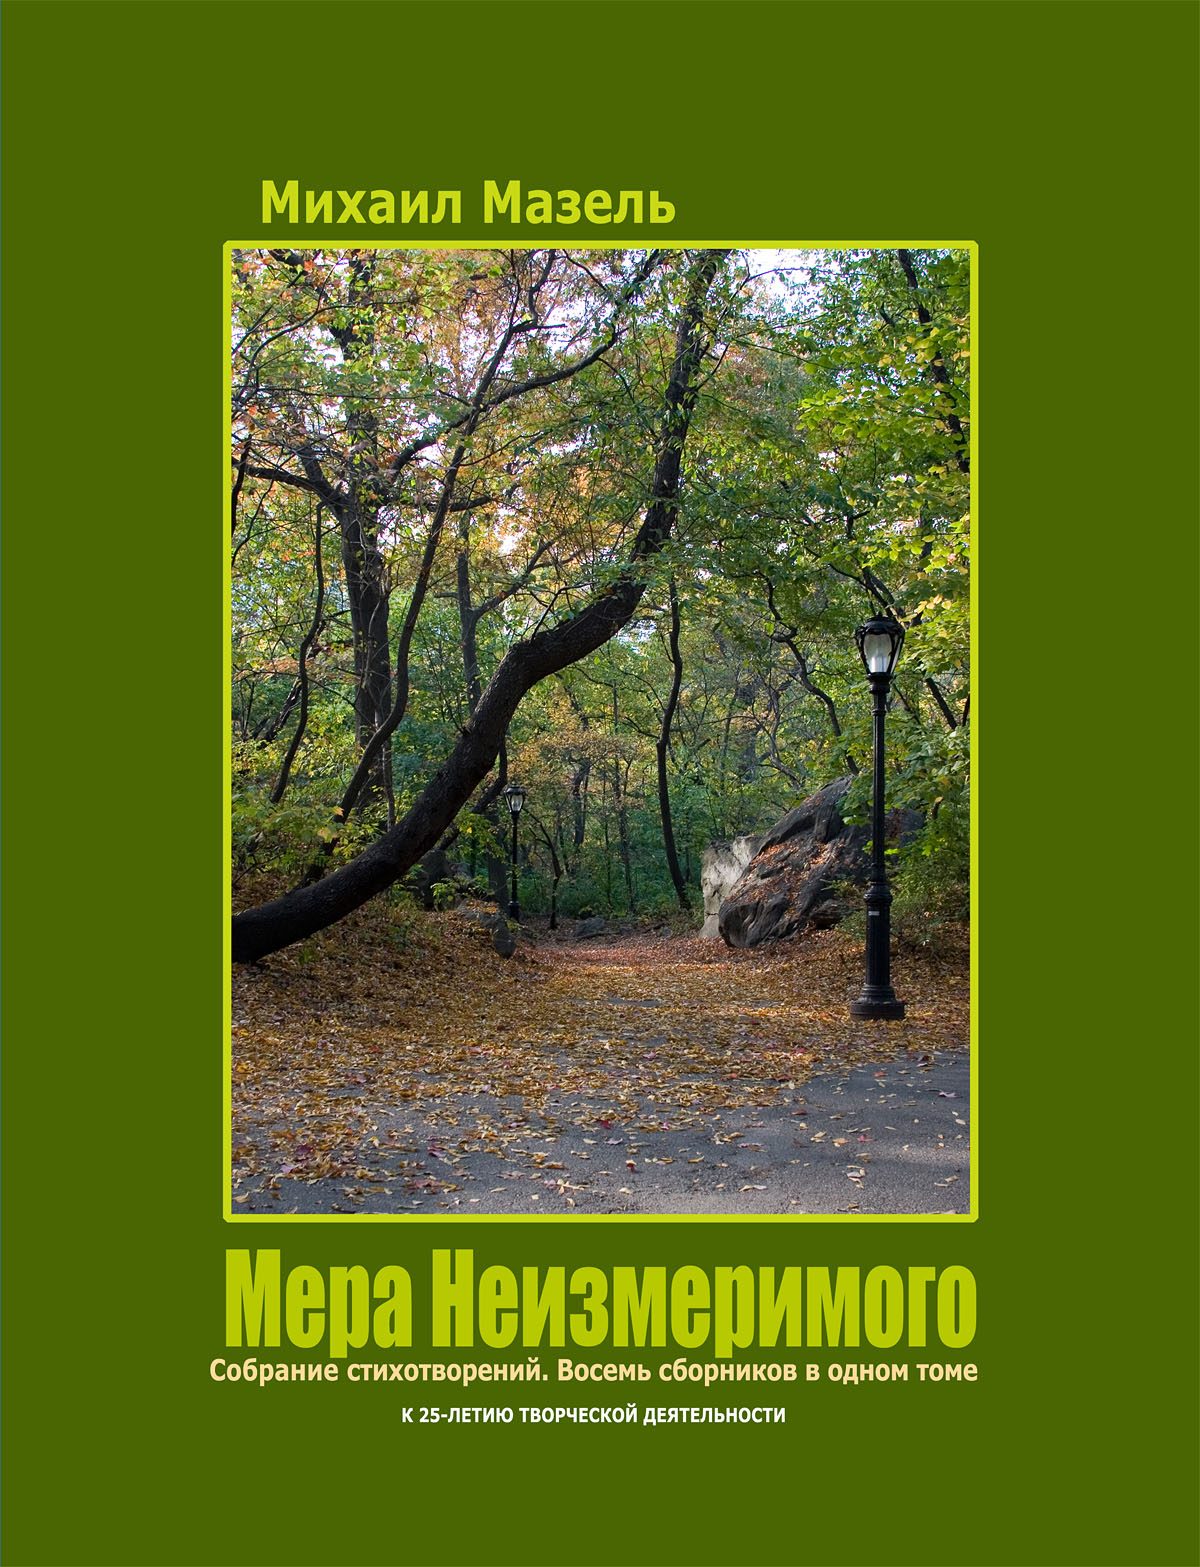 Mikhail Mazel. Literature. Photography. Webdesign. -=*=- Официальный сайт  Михаила Мазеля.